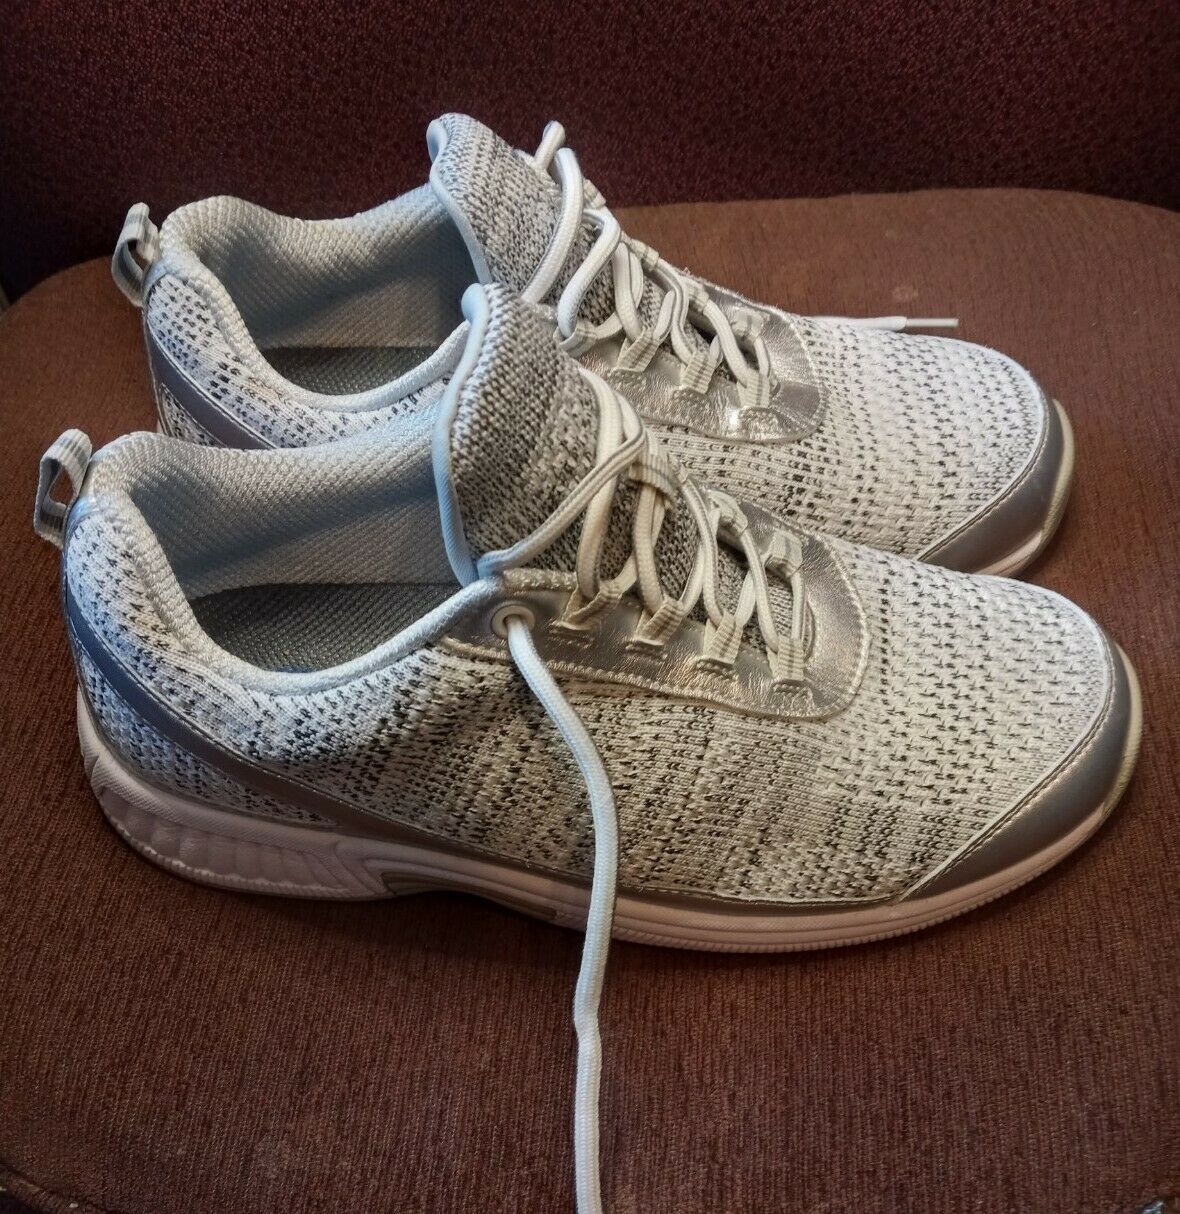 Orthofeet Biofit 982 Gray Diabetic Comfort Walking Shoes Women's X Wide Size 9